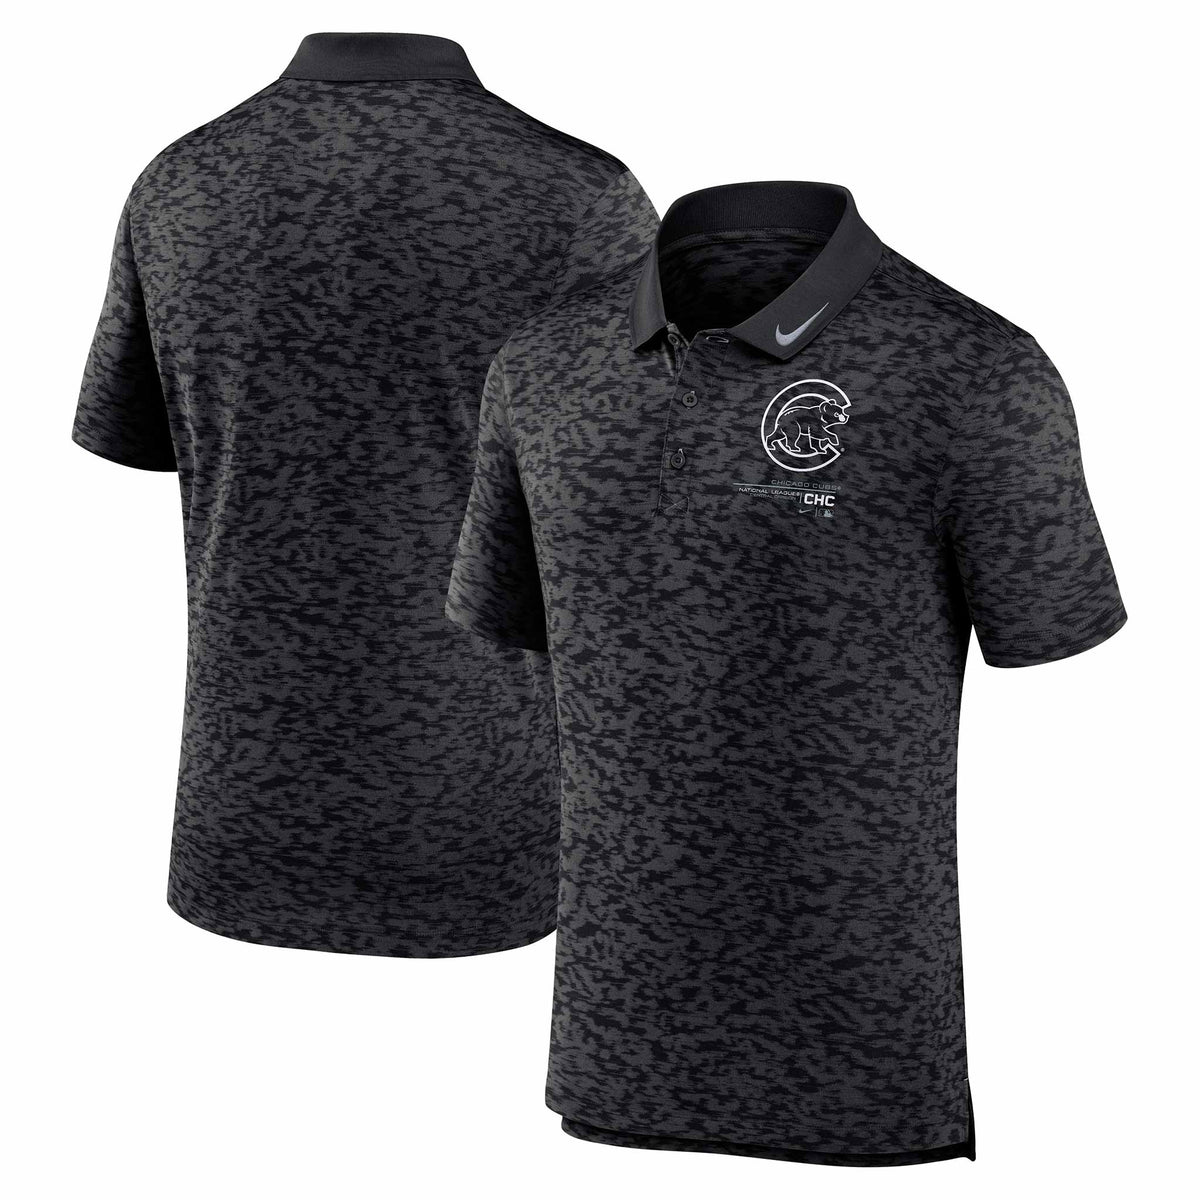 S-3XL Black Cubs Nike Dri-Fit Men's Poly #84A Polo Shirt